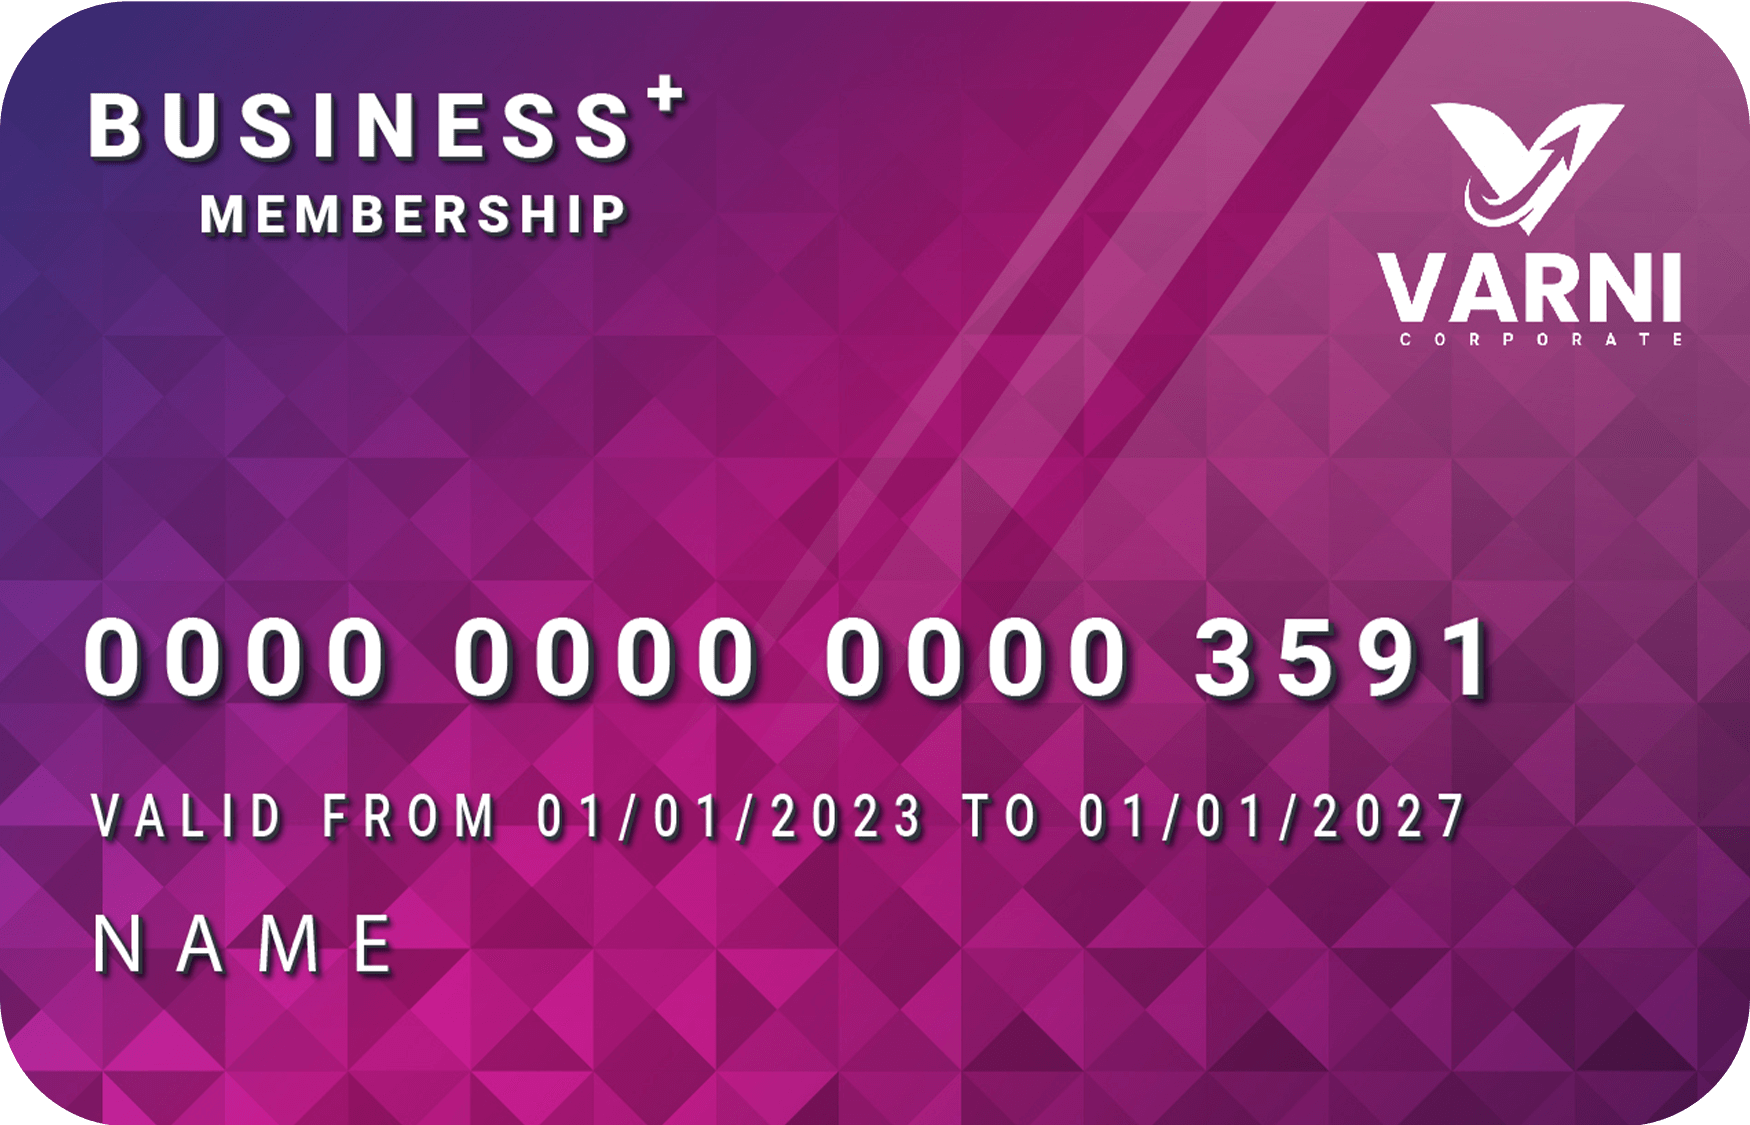 Business+ membership card